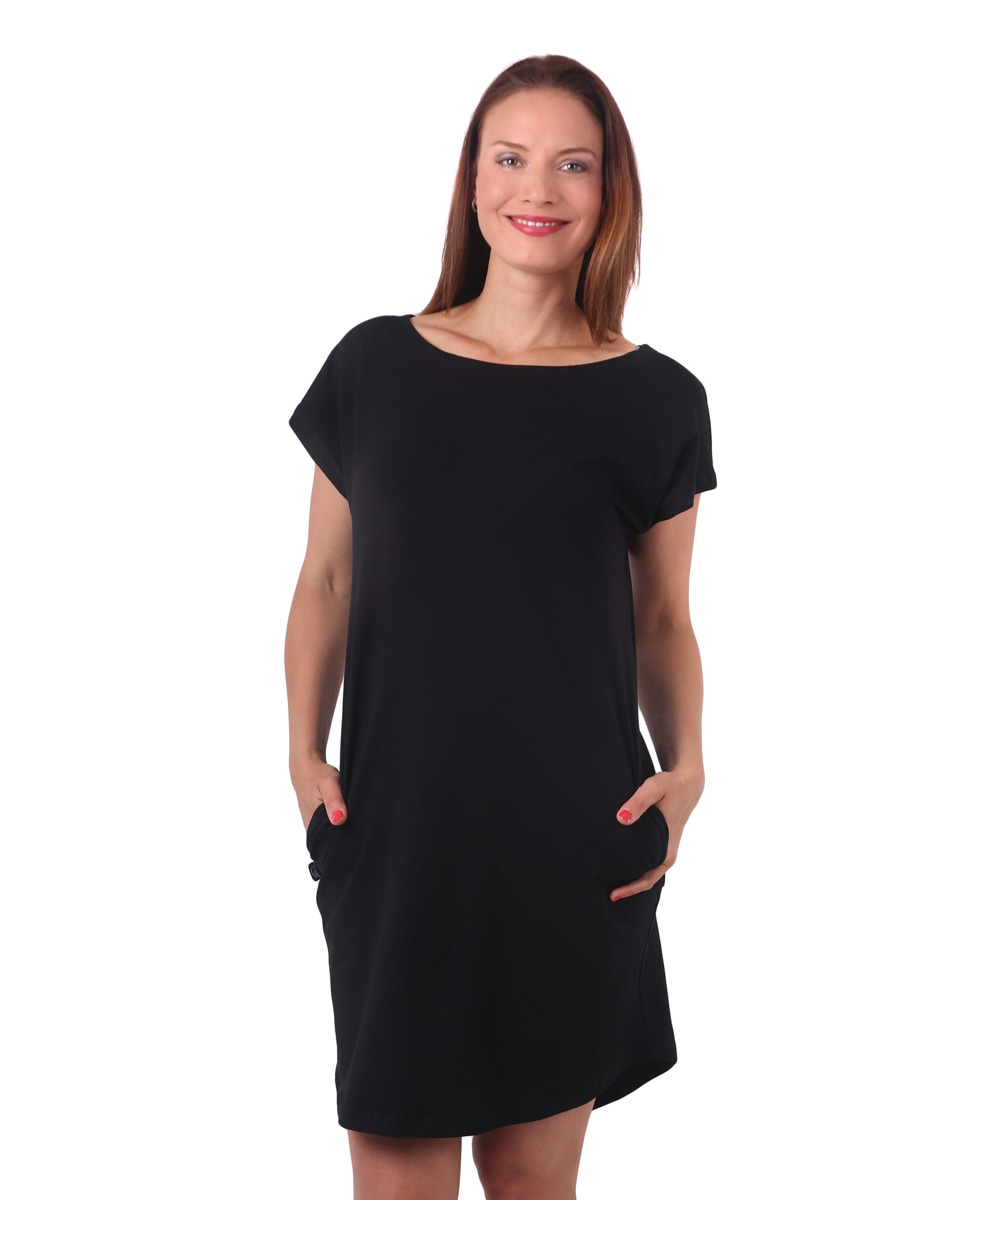 Women's dress with pockets Zoe, oversized loose fit, black